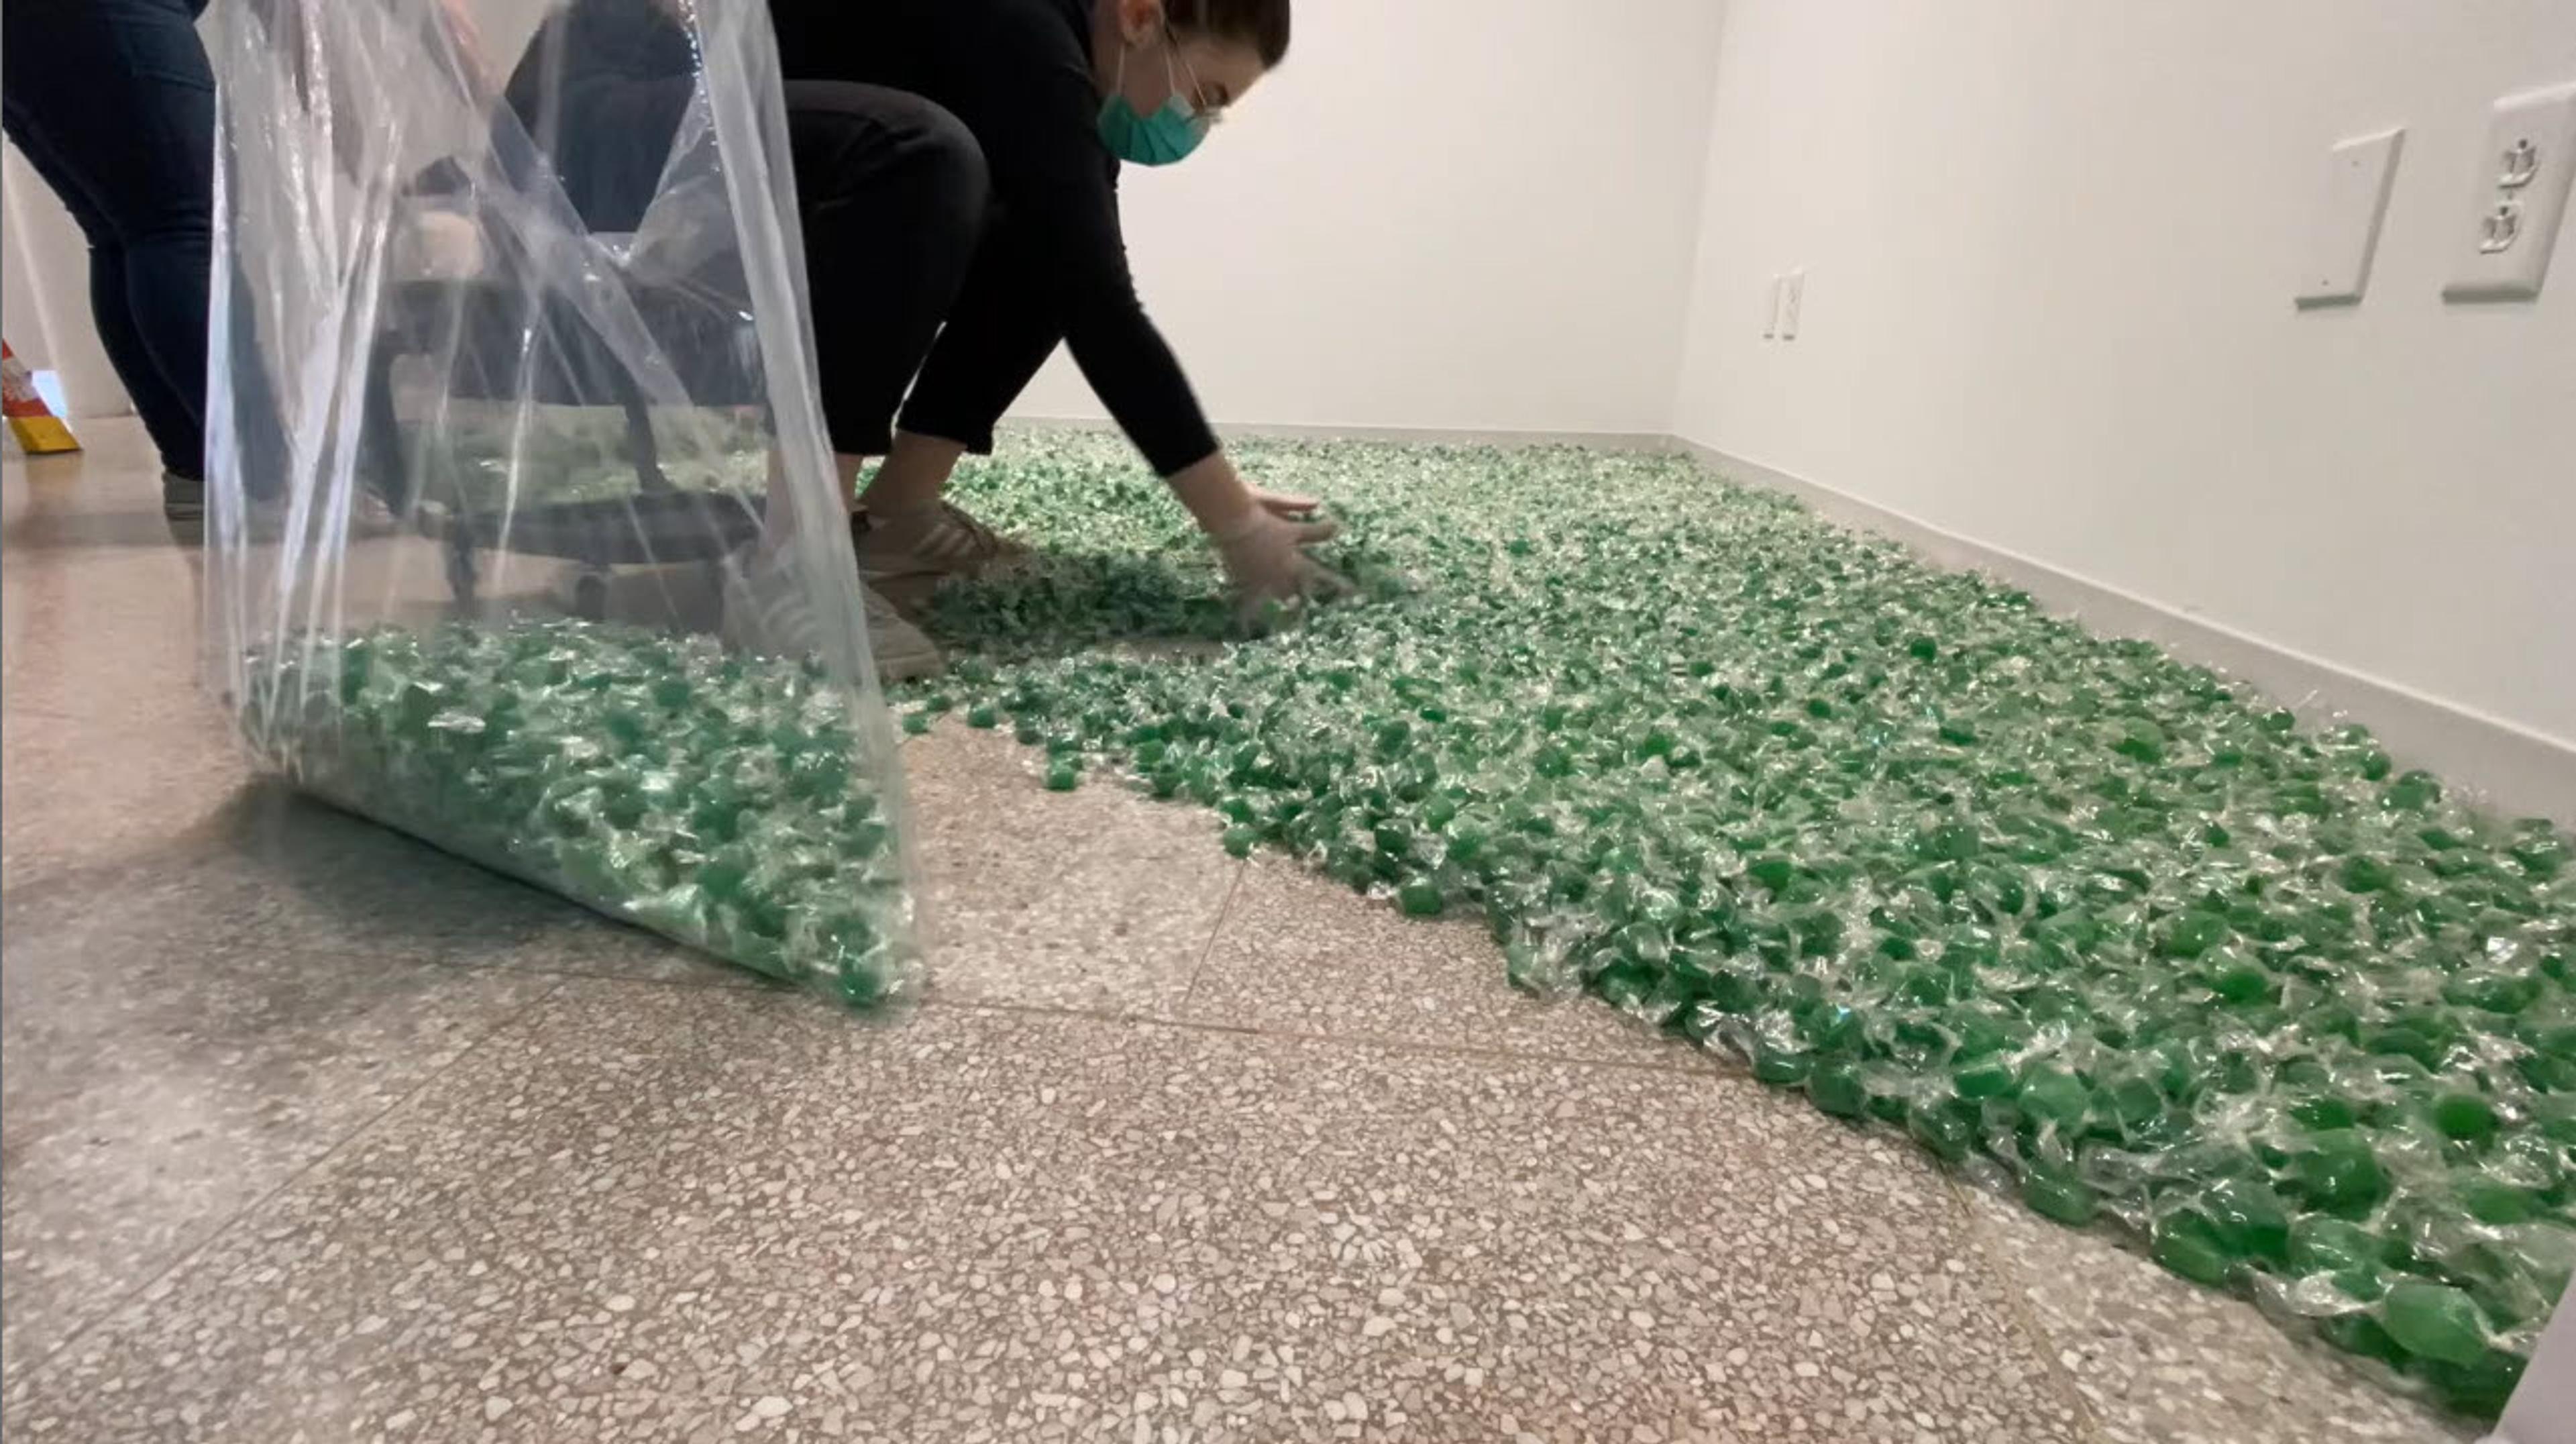 Felix Gonzalez-Torres  "Untitled" (L.A.) installation Rit City Art Space New York